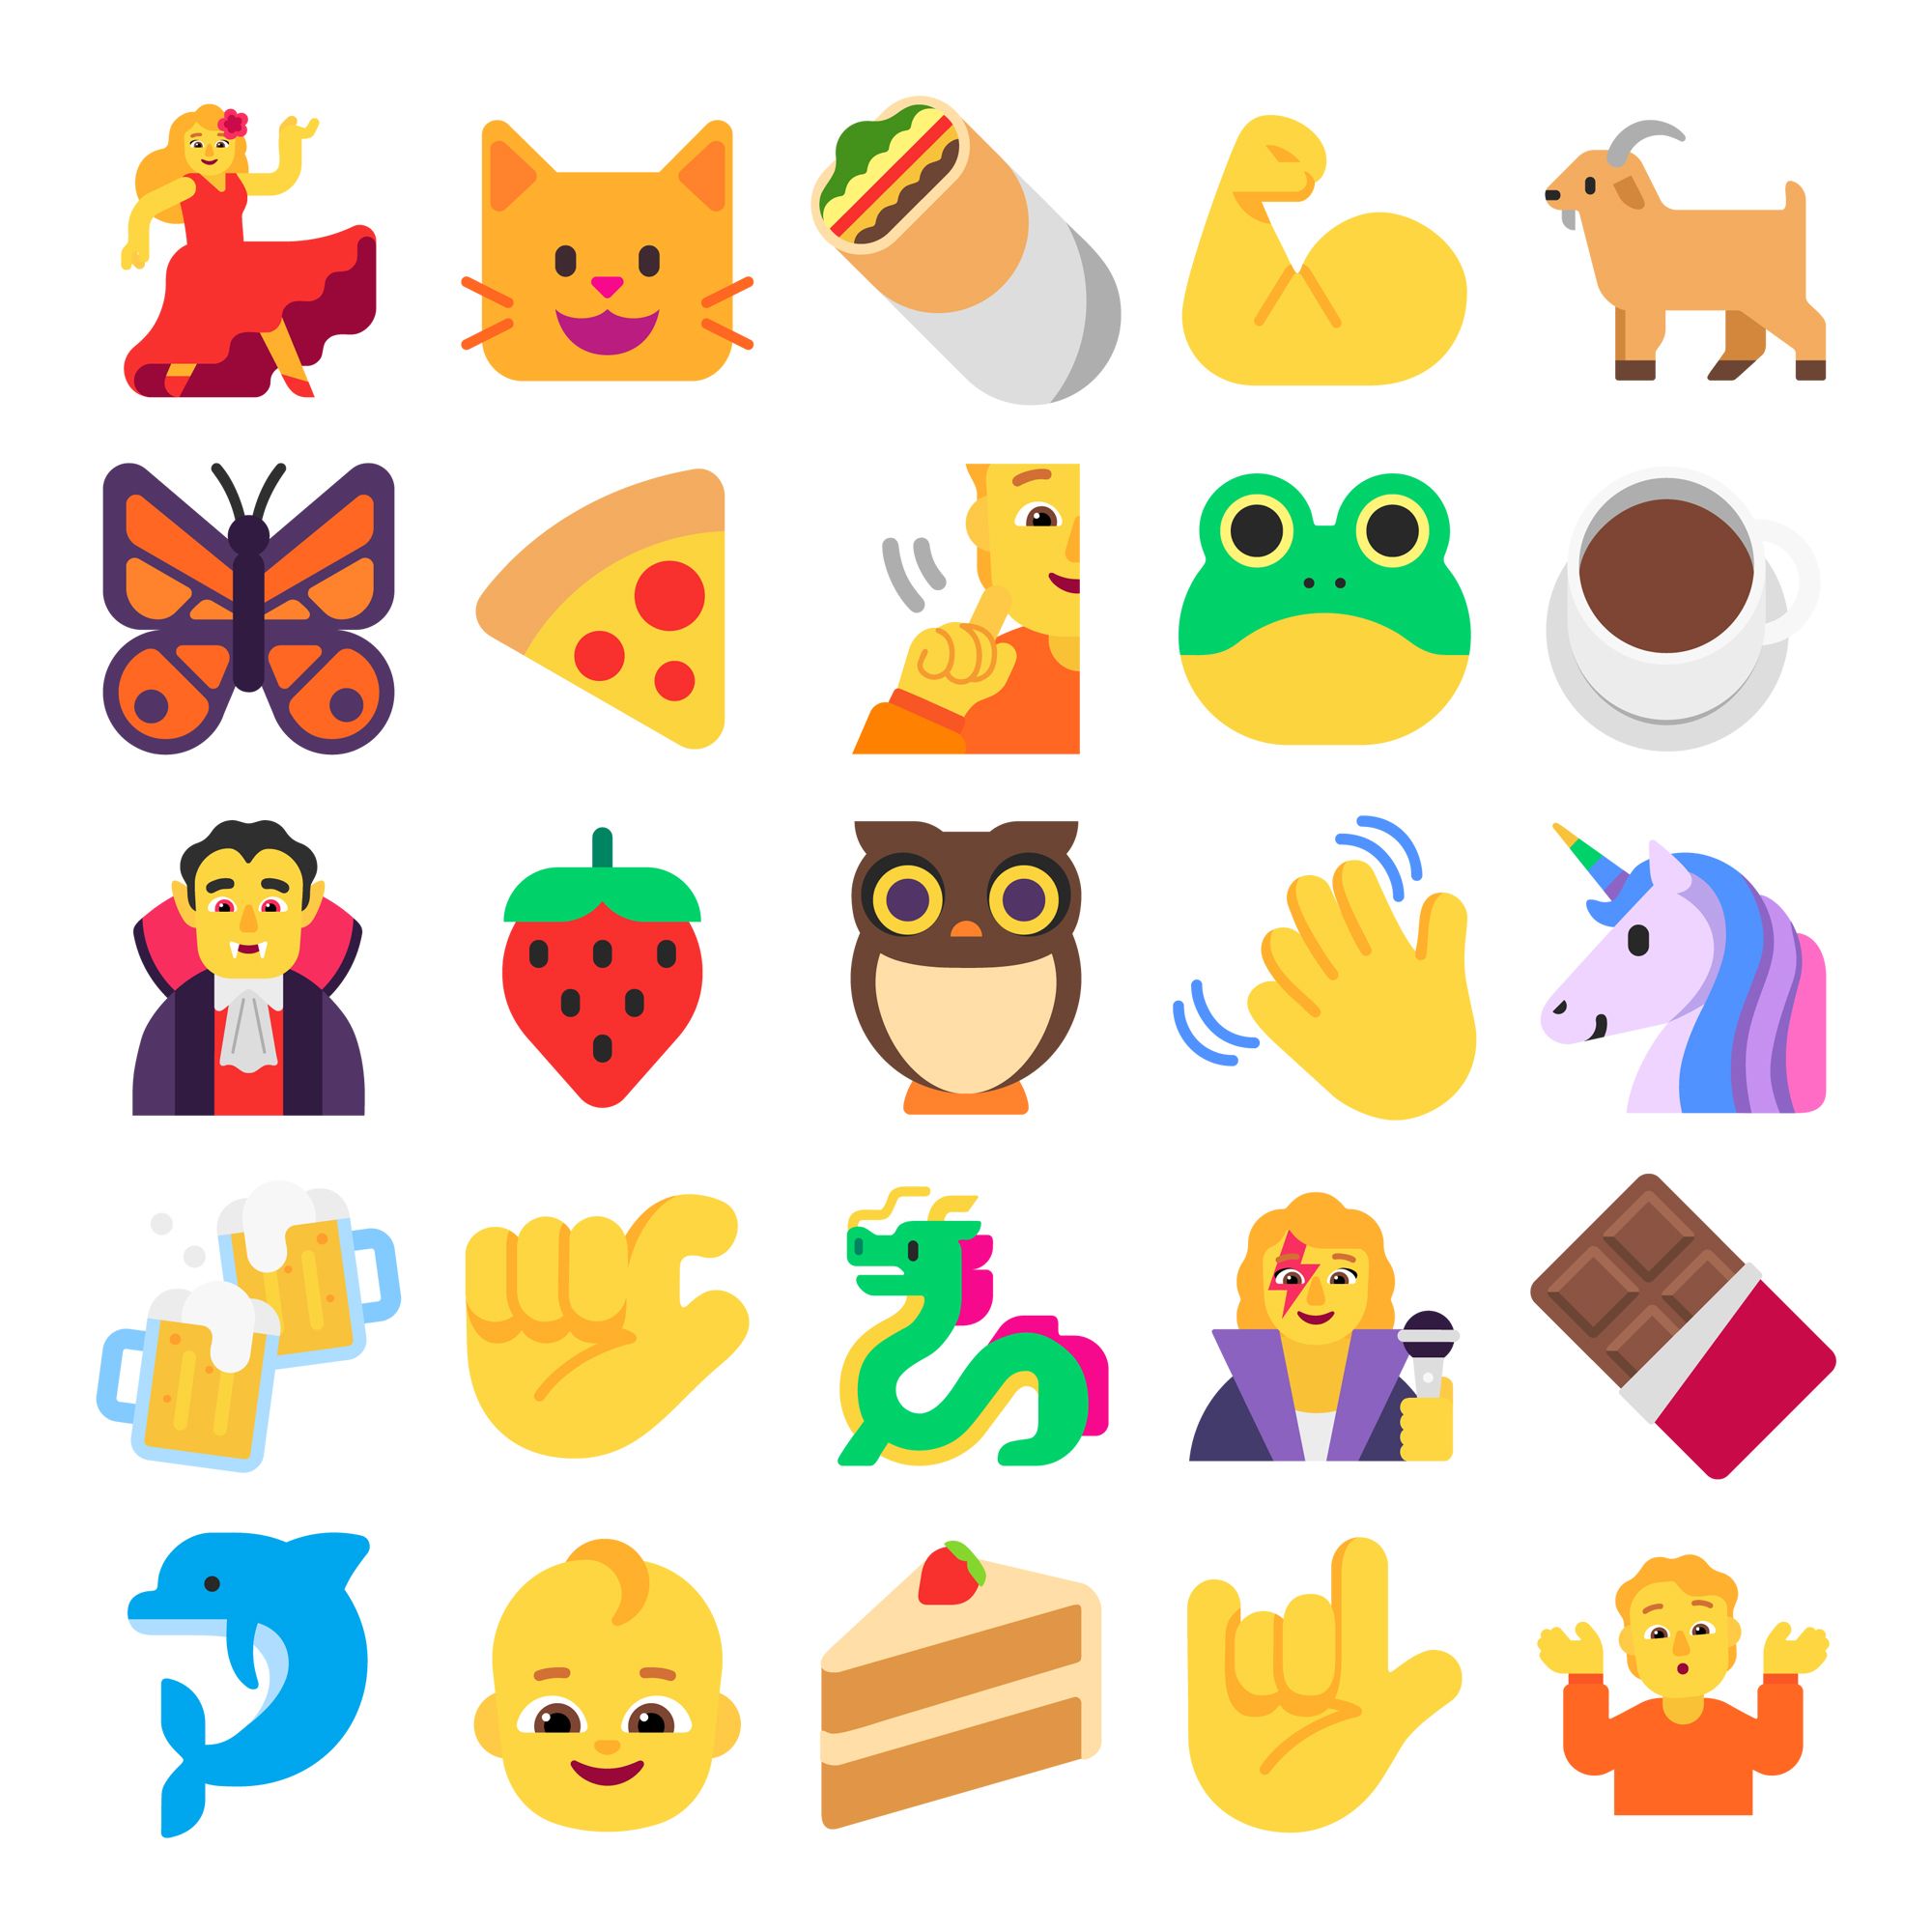 Emojipedia-Windows-11-Fluent-Changelog-People-Gestures-Animals-Food